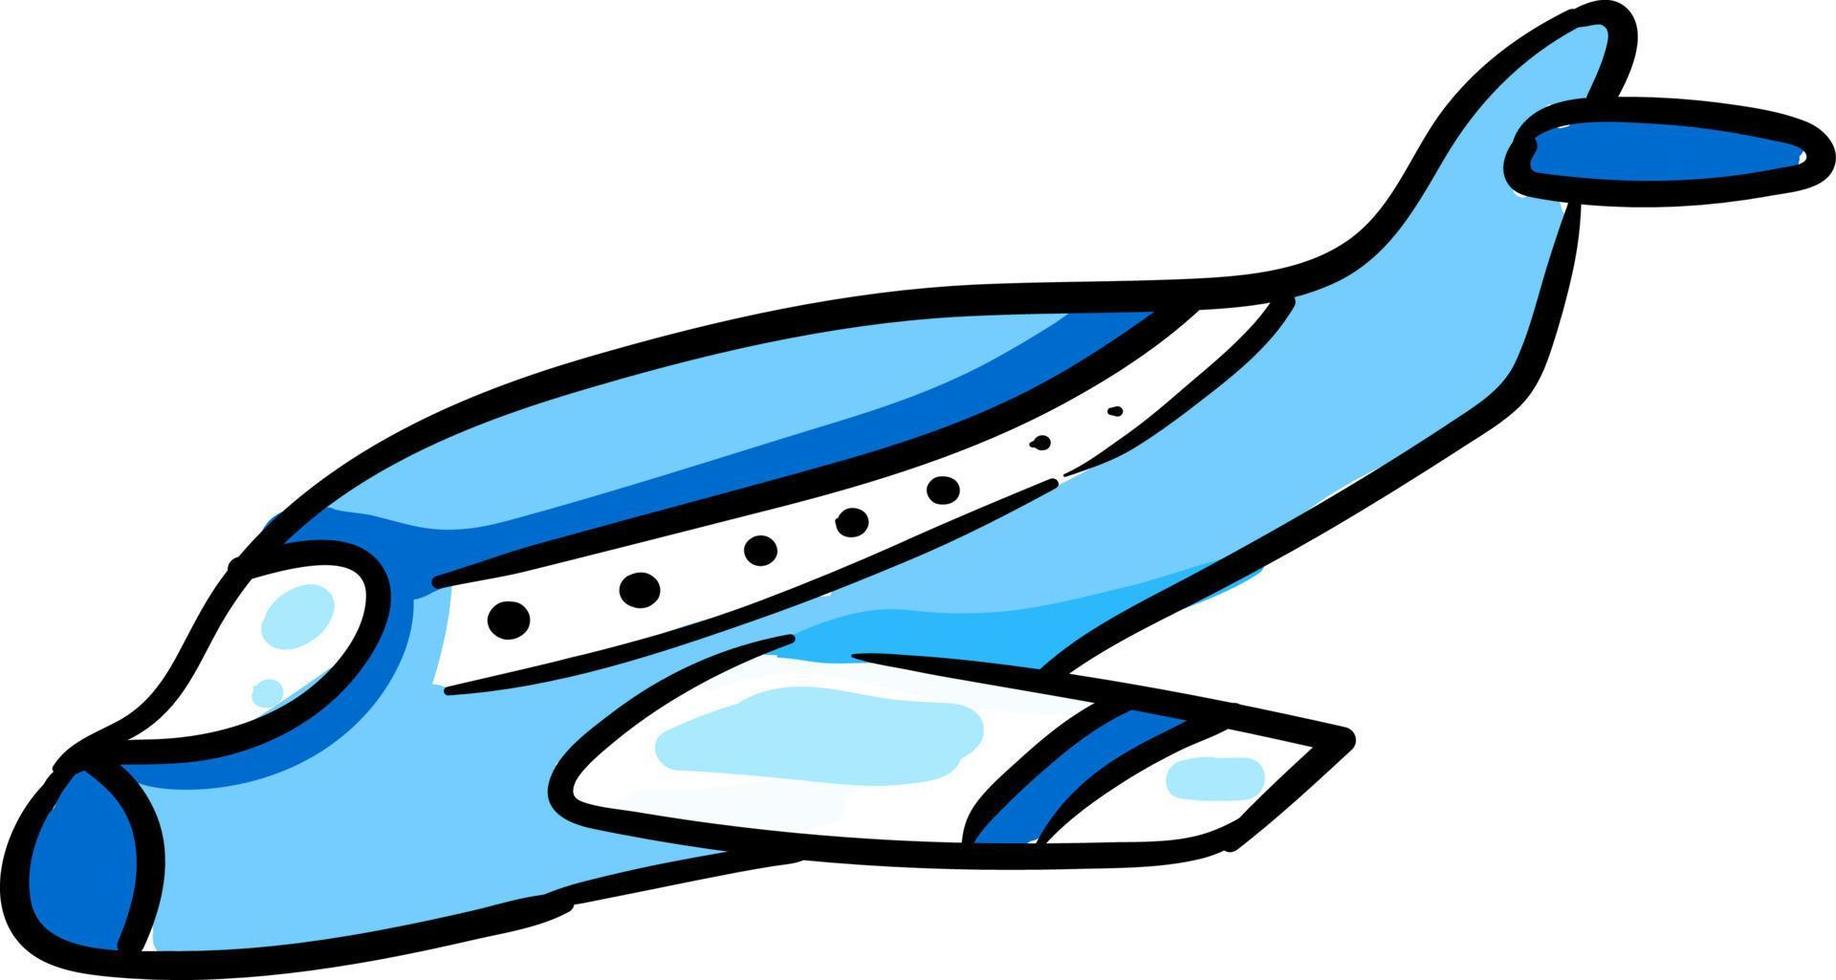 Blue airplane, illustration, vector on white background